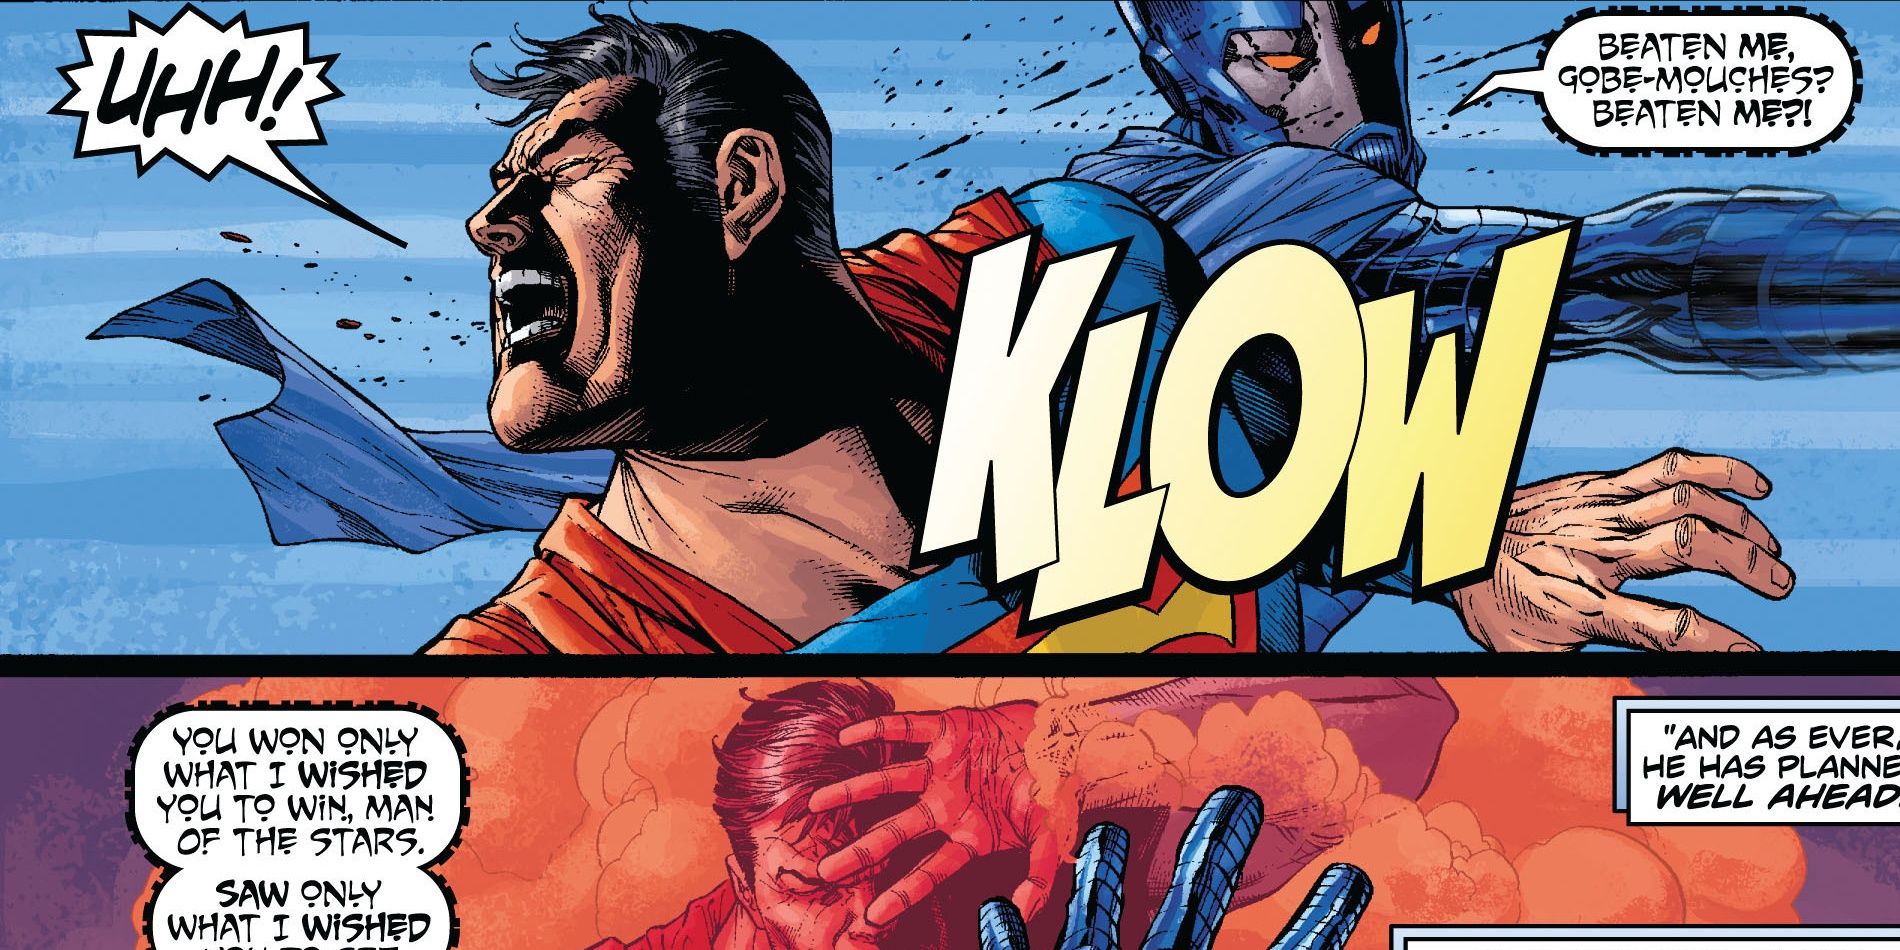 An image of comic art depicting Superman battling Khyber